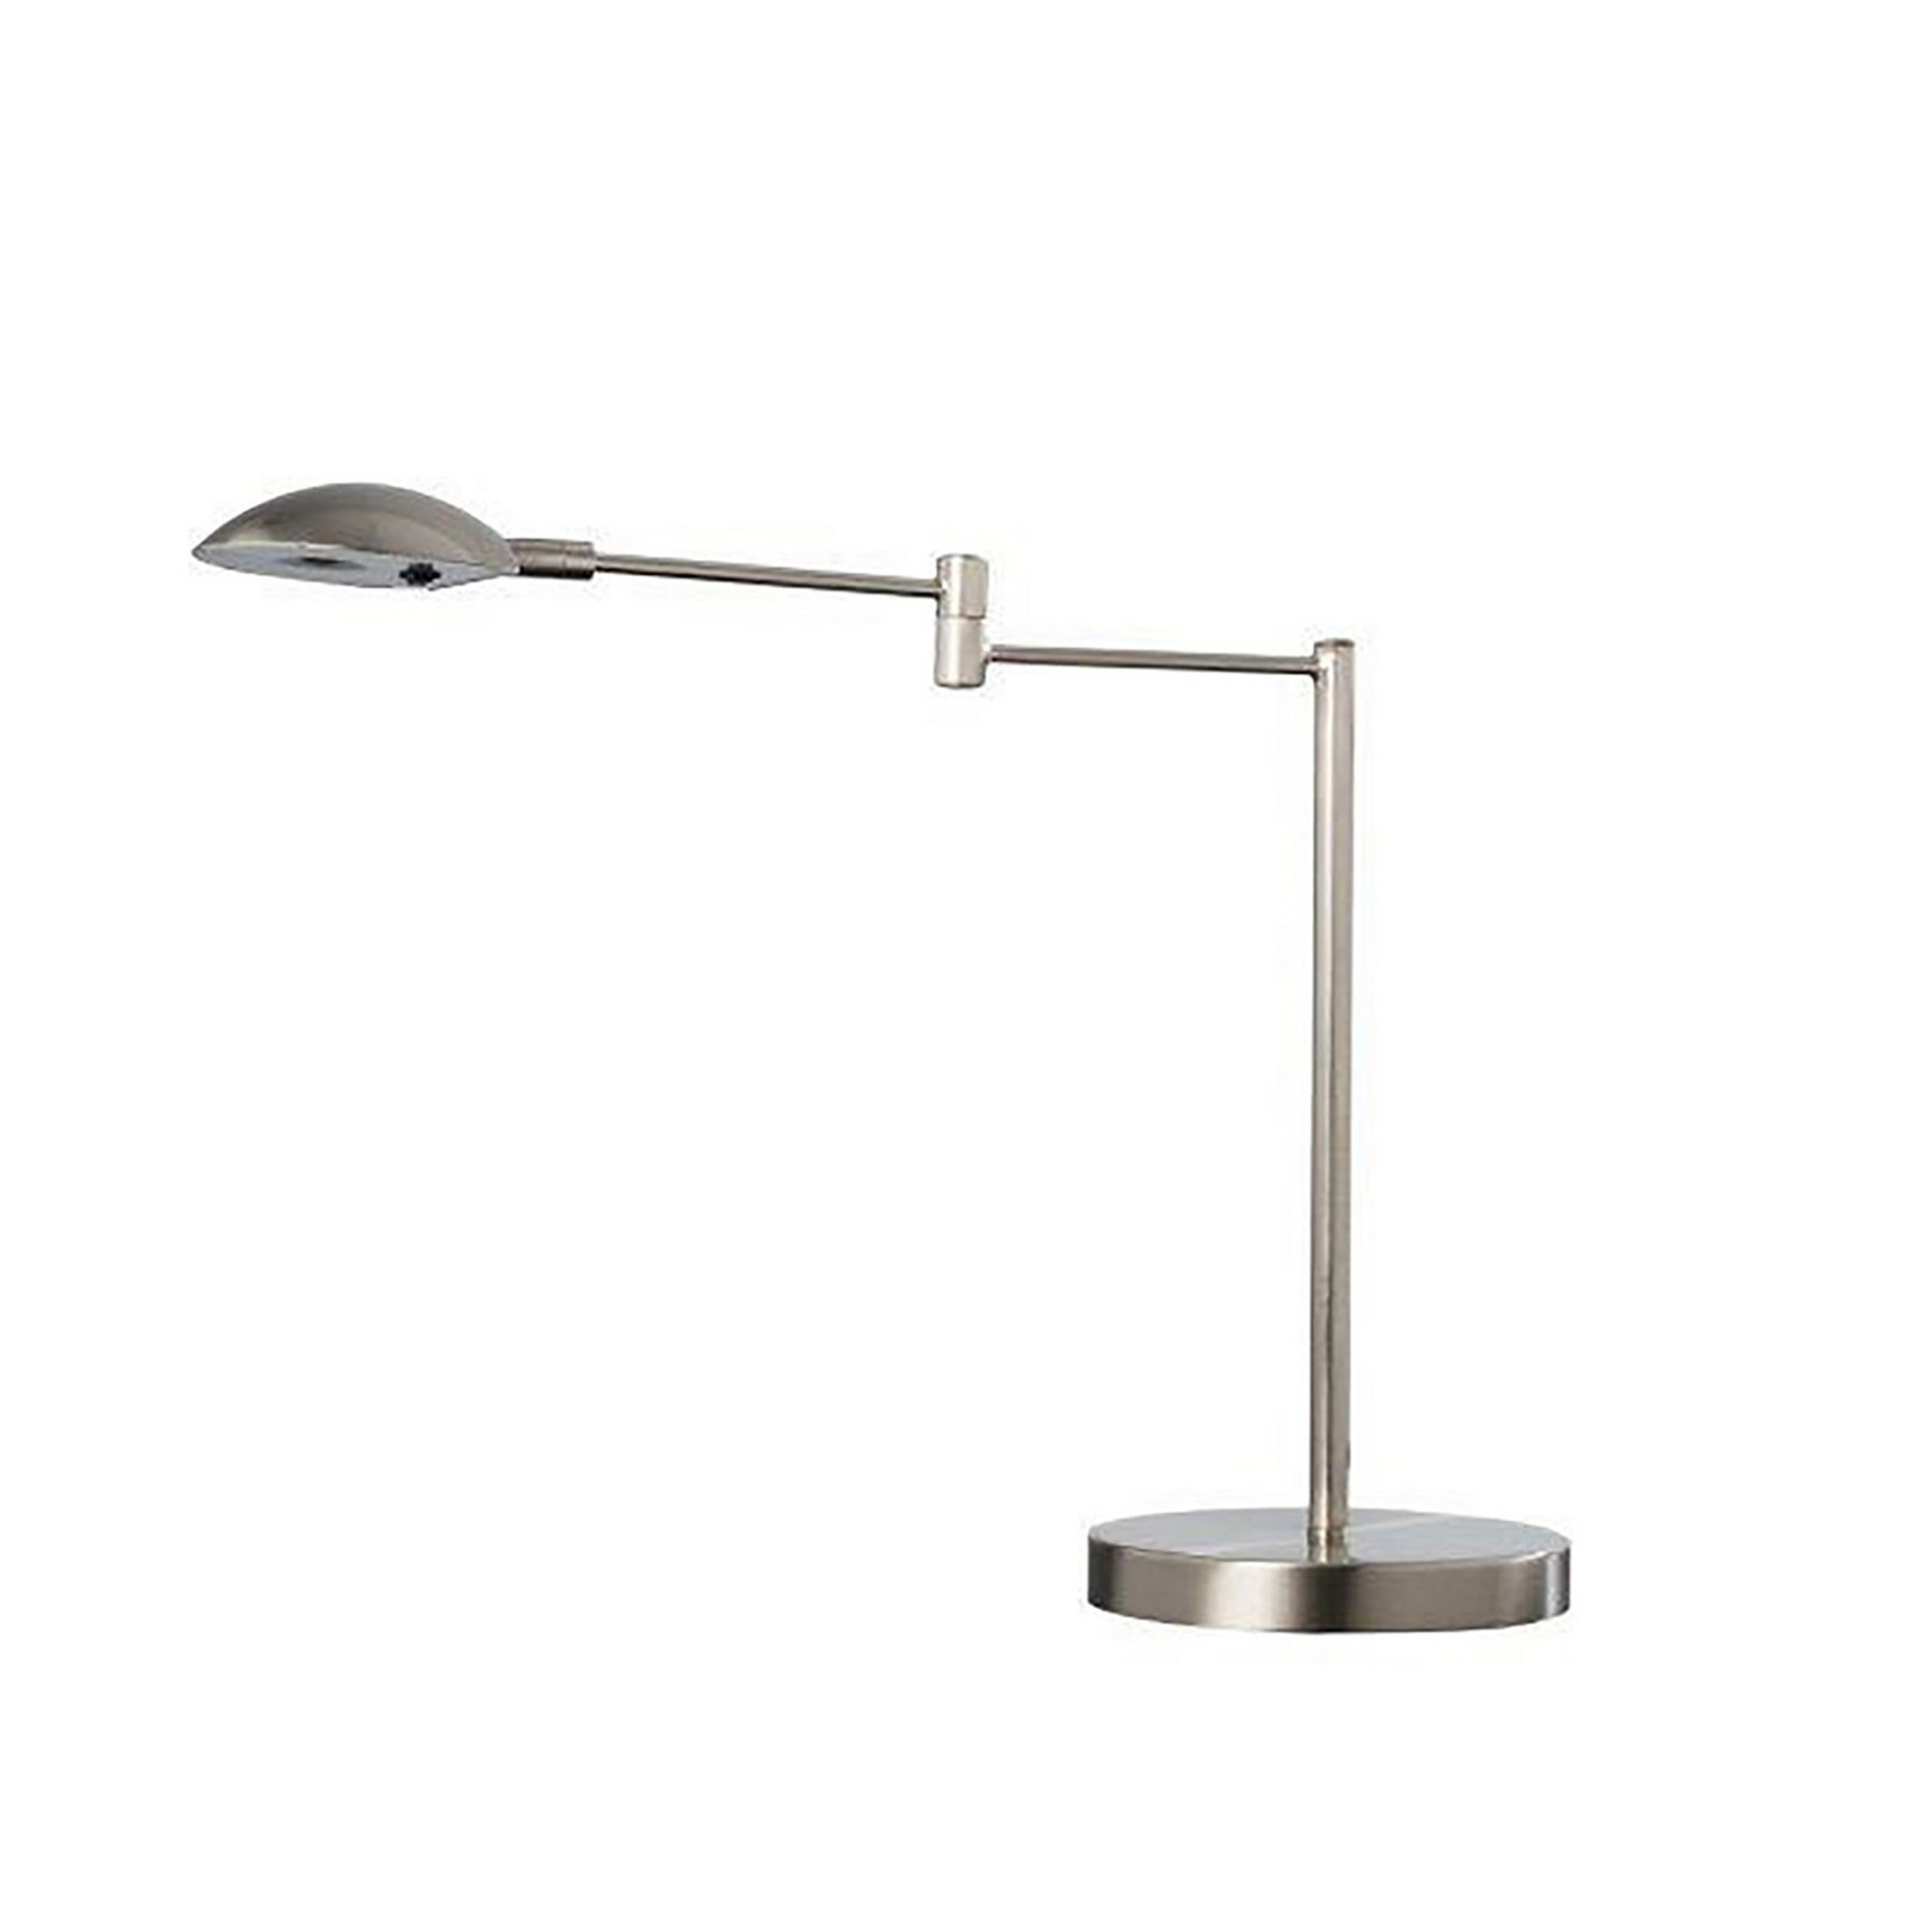 Benjara Benzara BM240388 Desk Lamp with Adjustable Swing Metal Arm, Silver